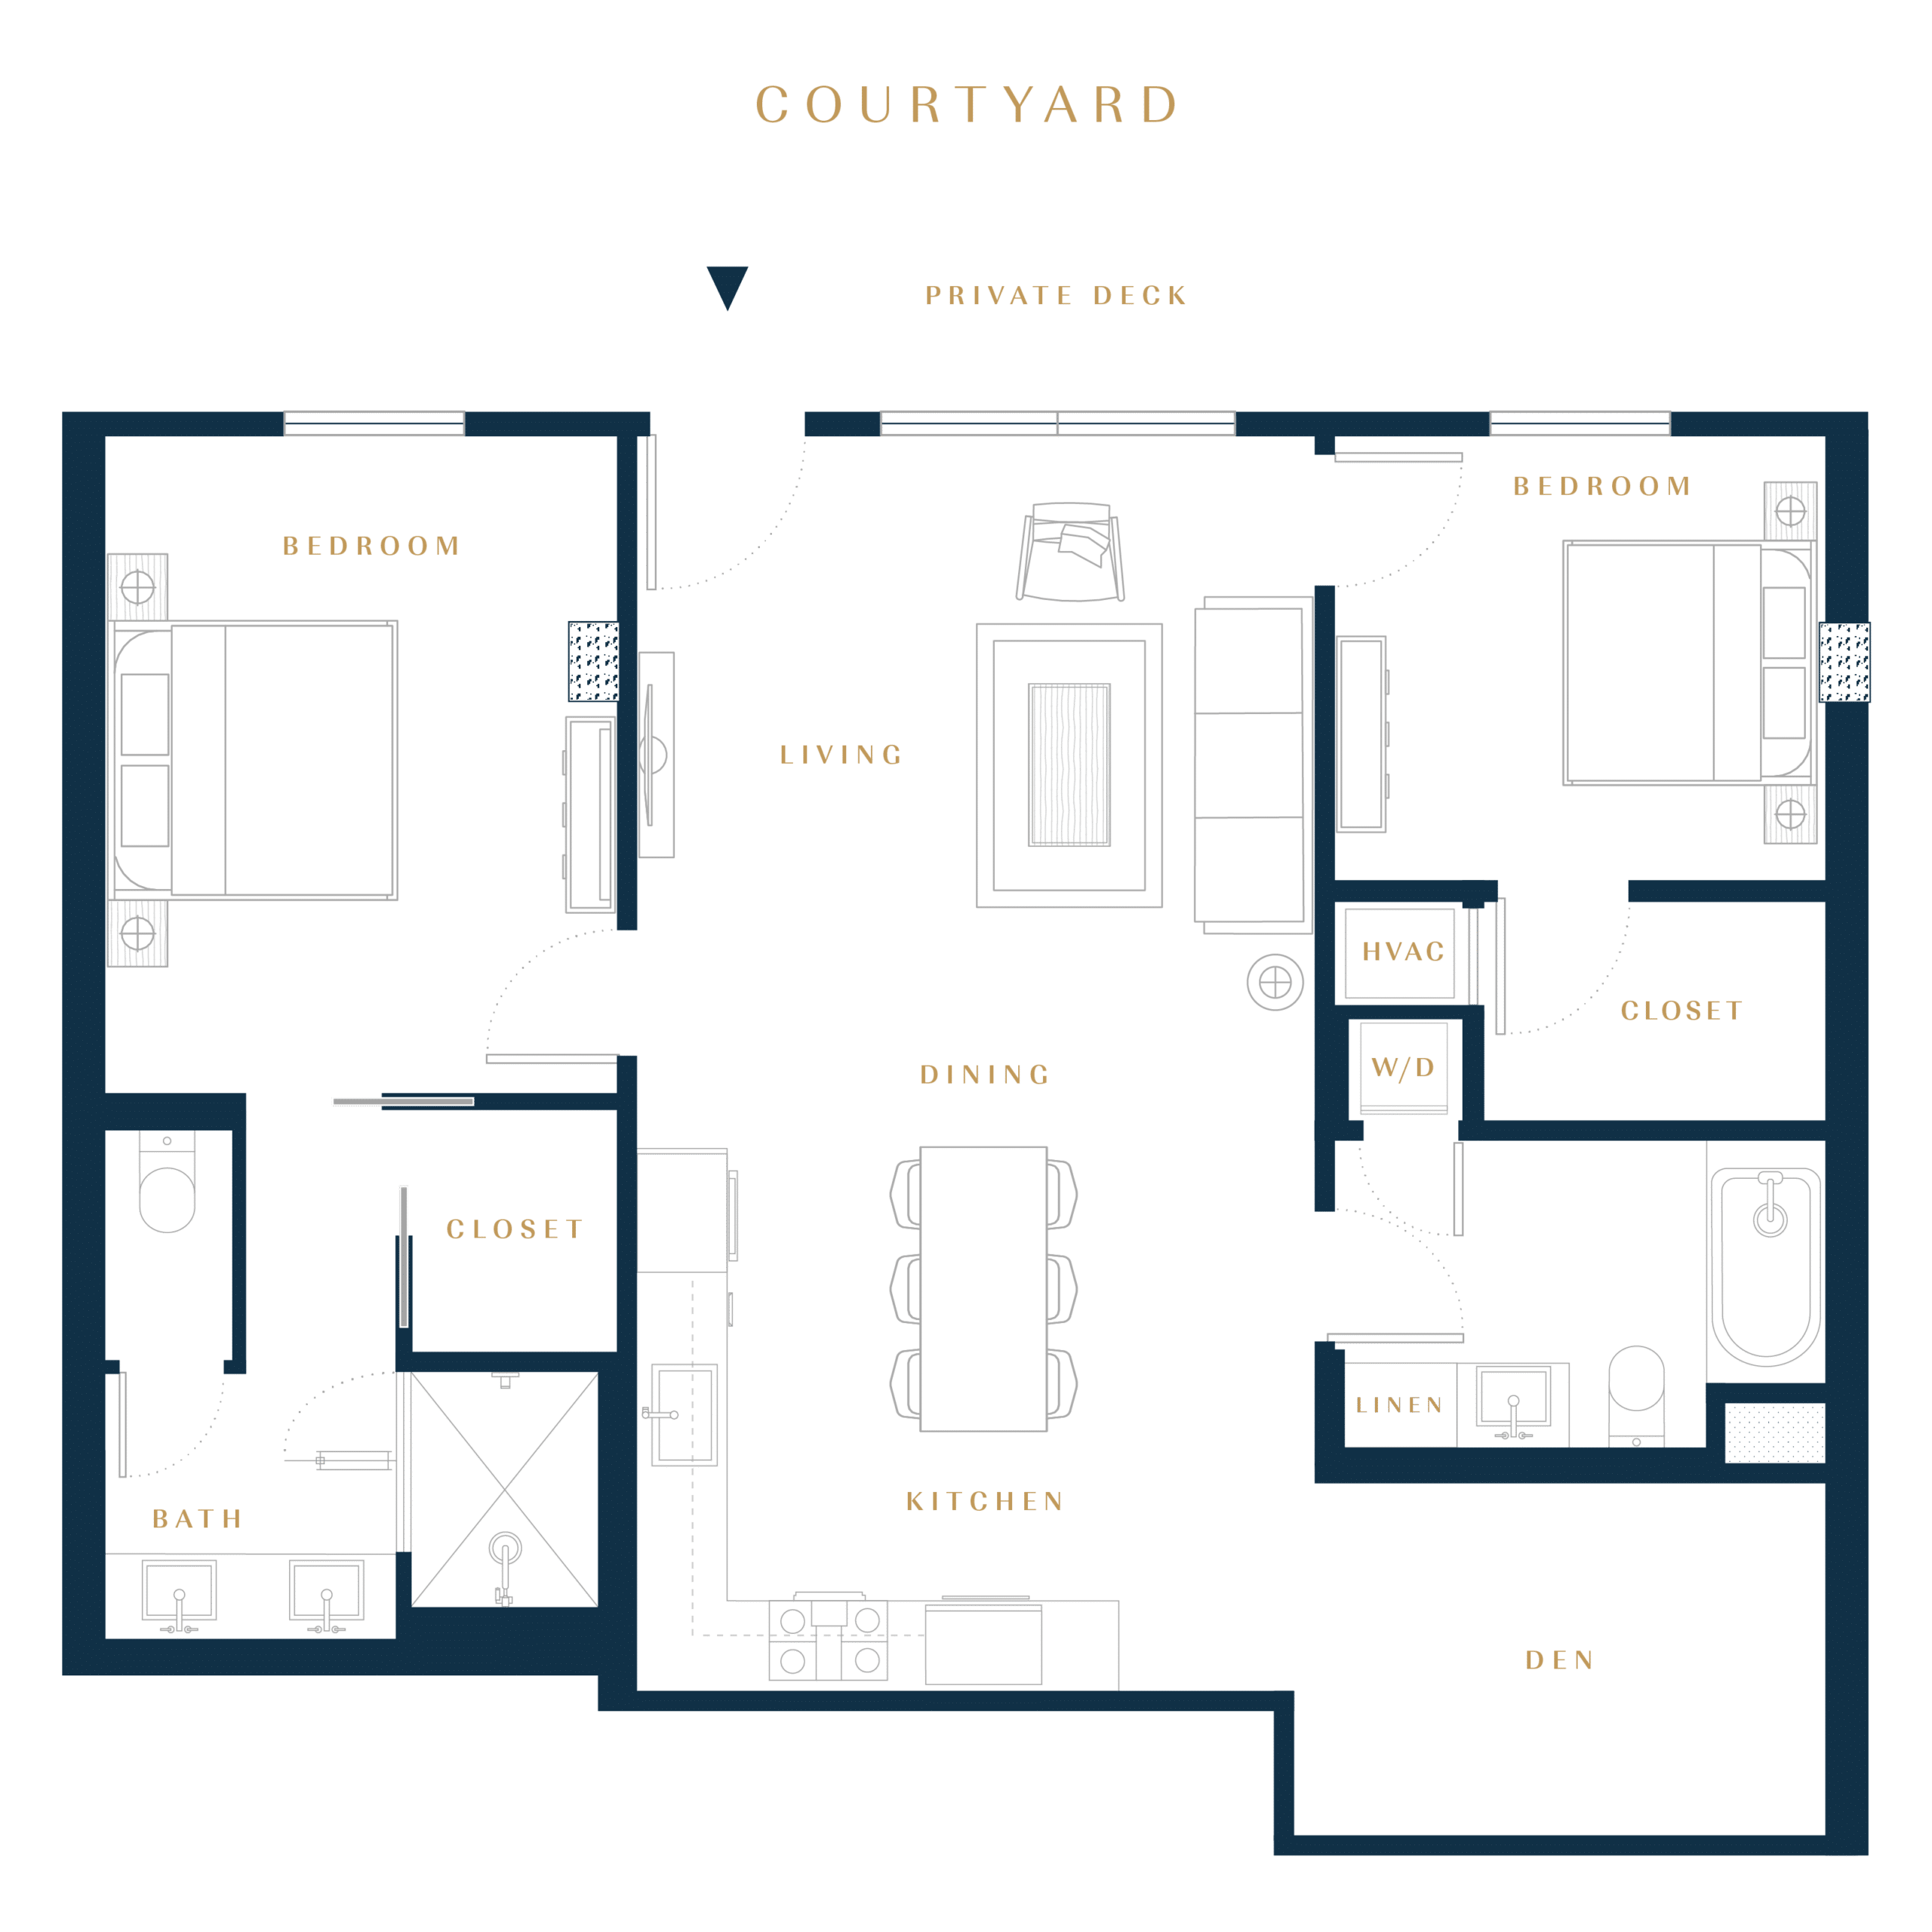 Residence 2K luxury condo floor plan in San Francisco Dogpatch